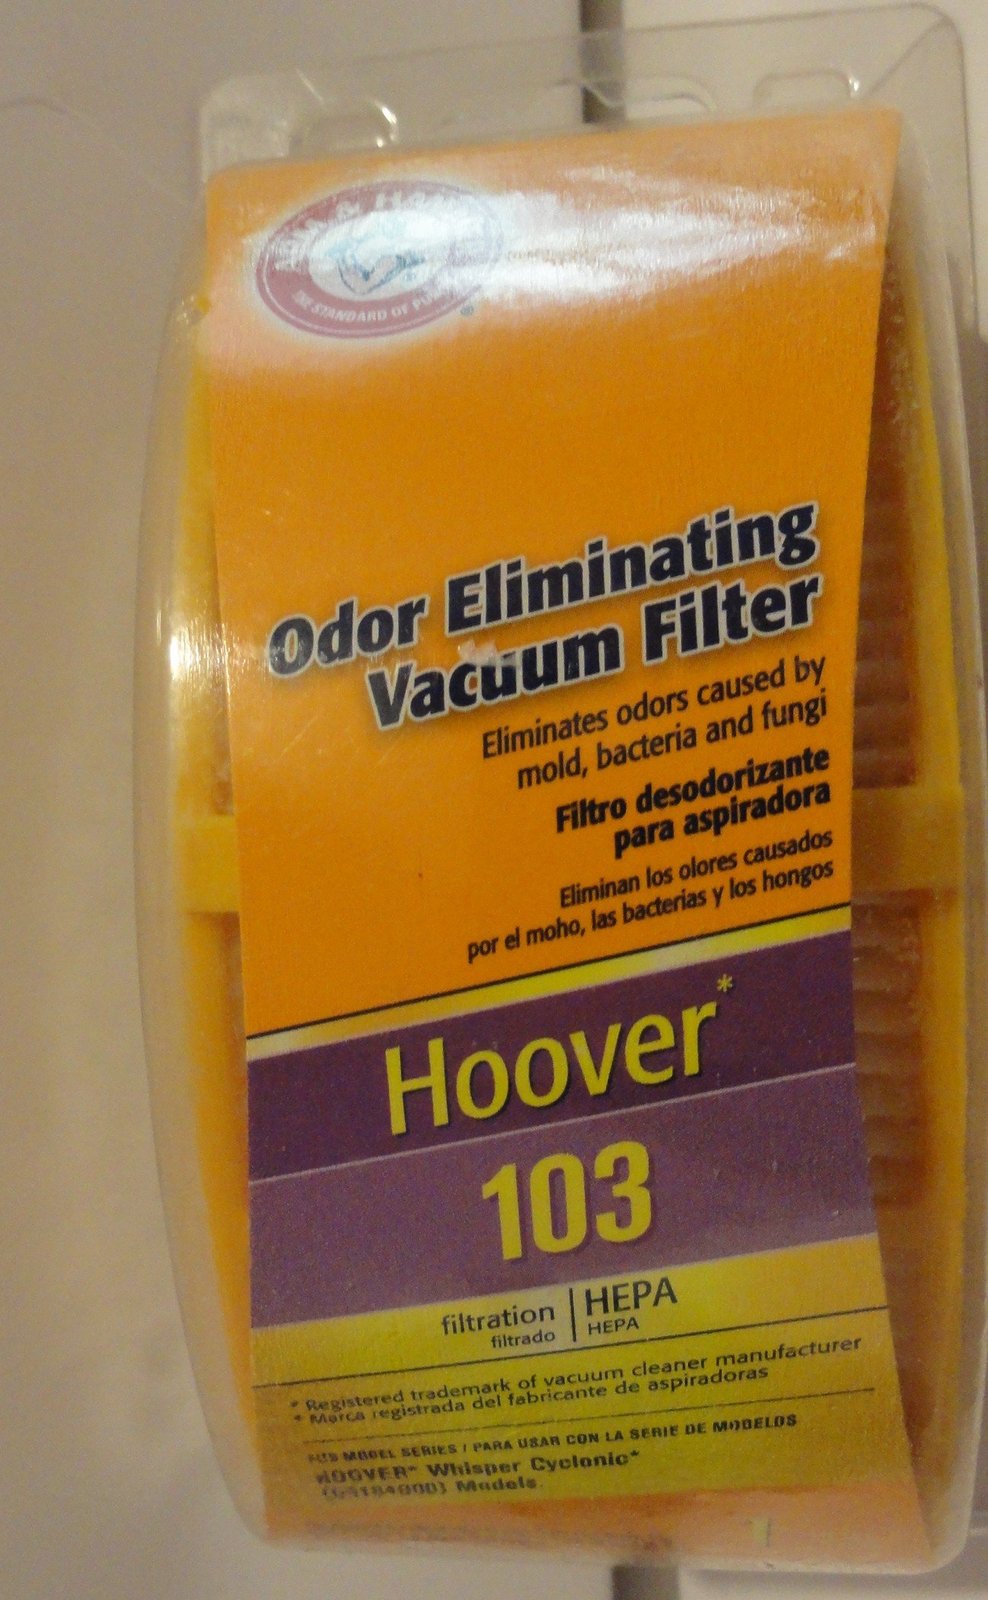 Arm & Hammer Odor Eliminating Vaccum Filter Hoover 103 (1 ct.) - $2.06